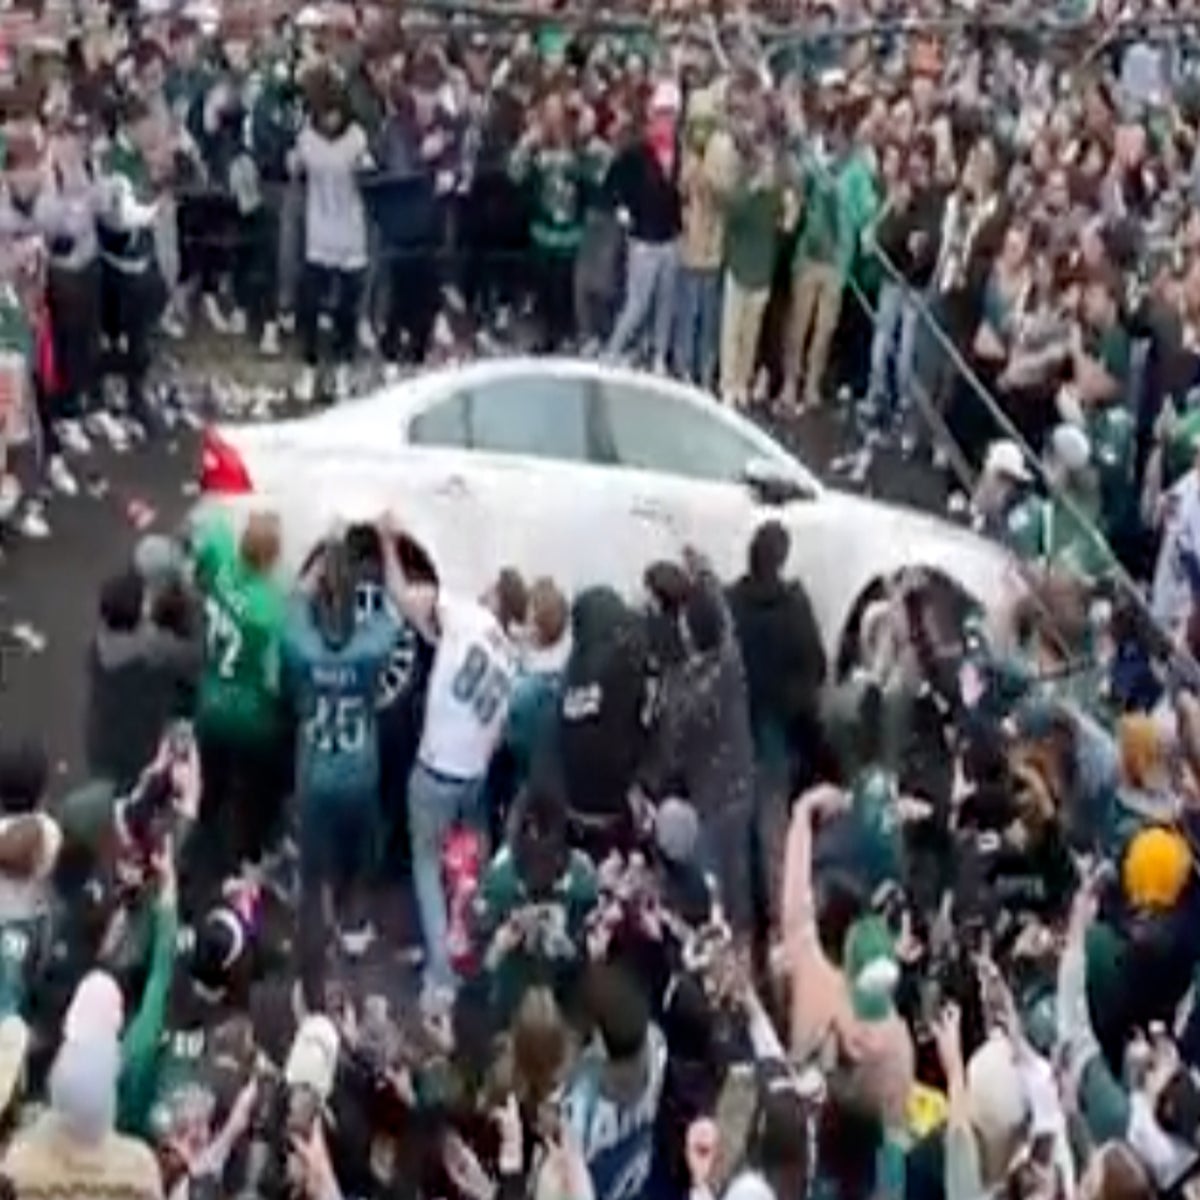 Rowdy Eagles fans flip parked car ahead of Super Bowl